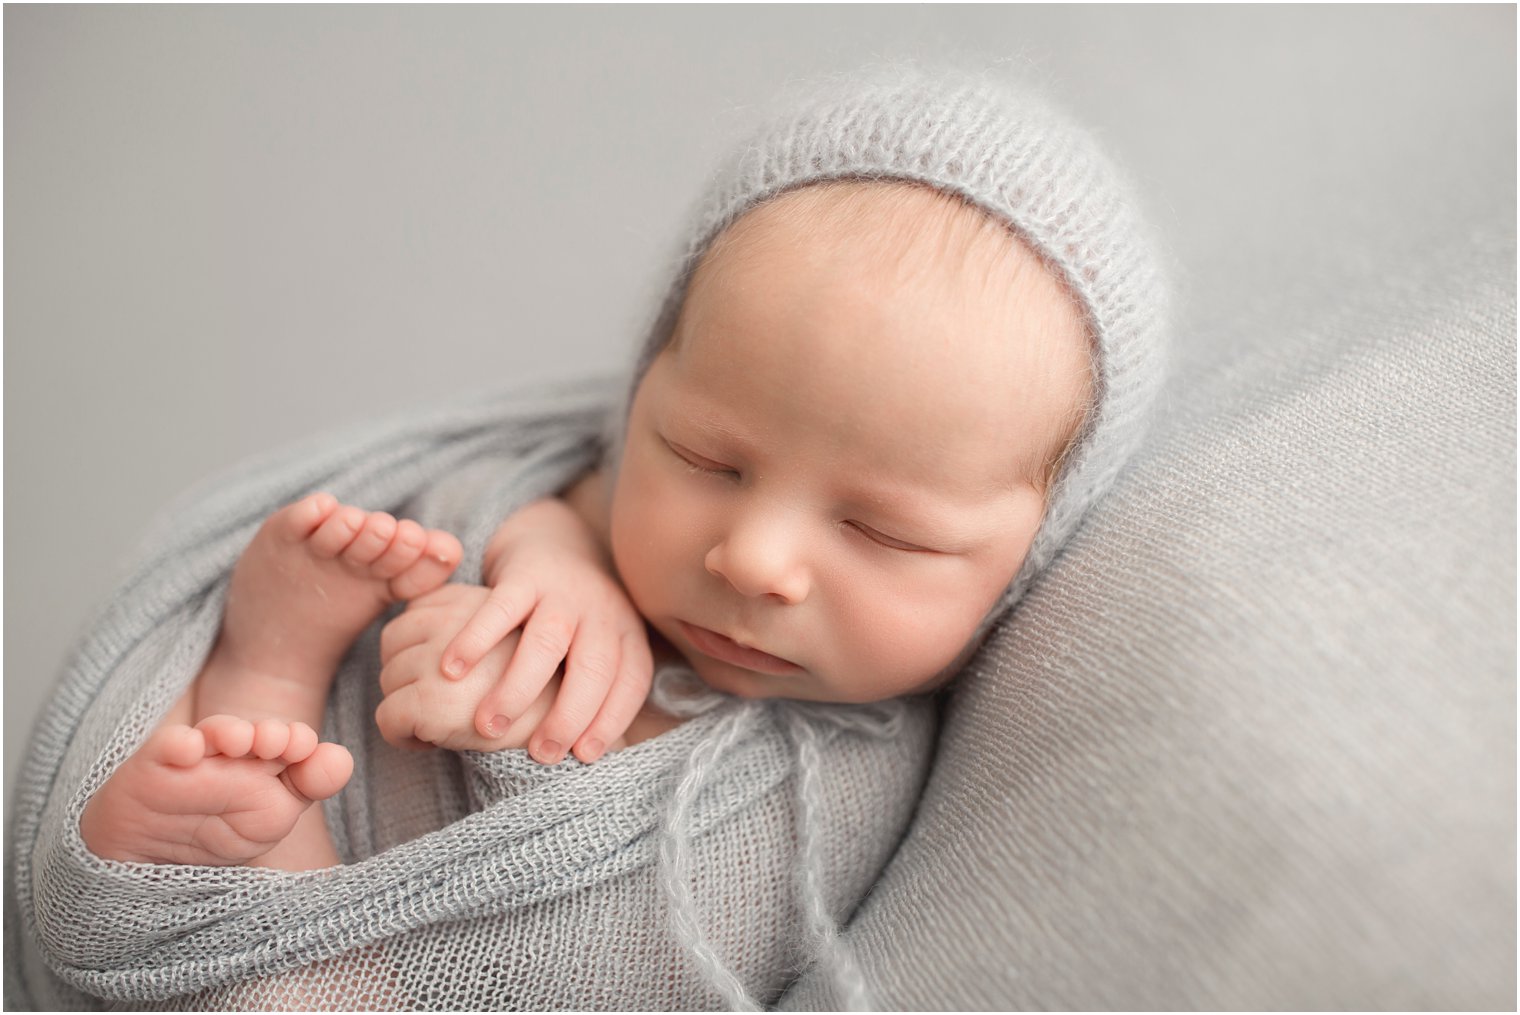 Sleepy newborn with knit hat | Red Bank NJ Newborn Photography by Idalia Photography